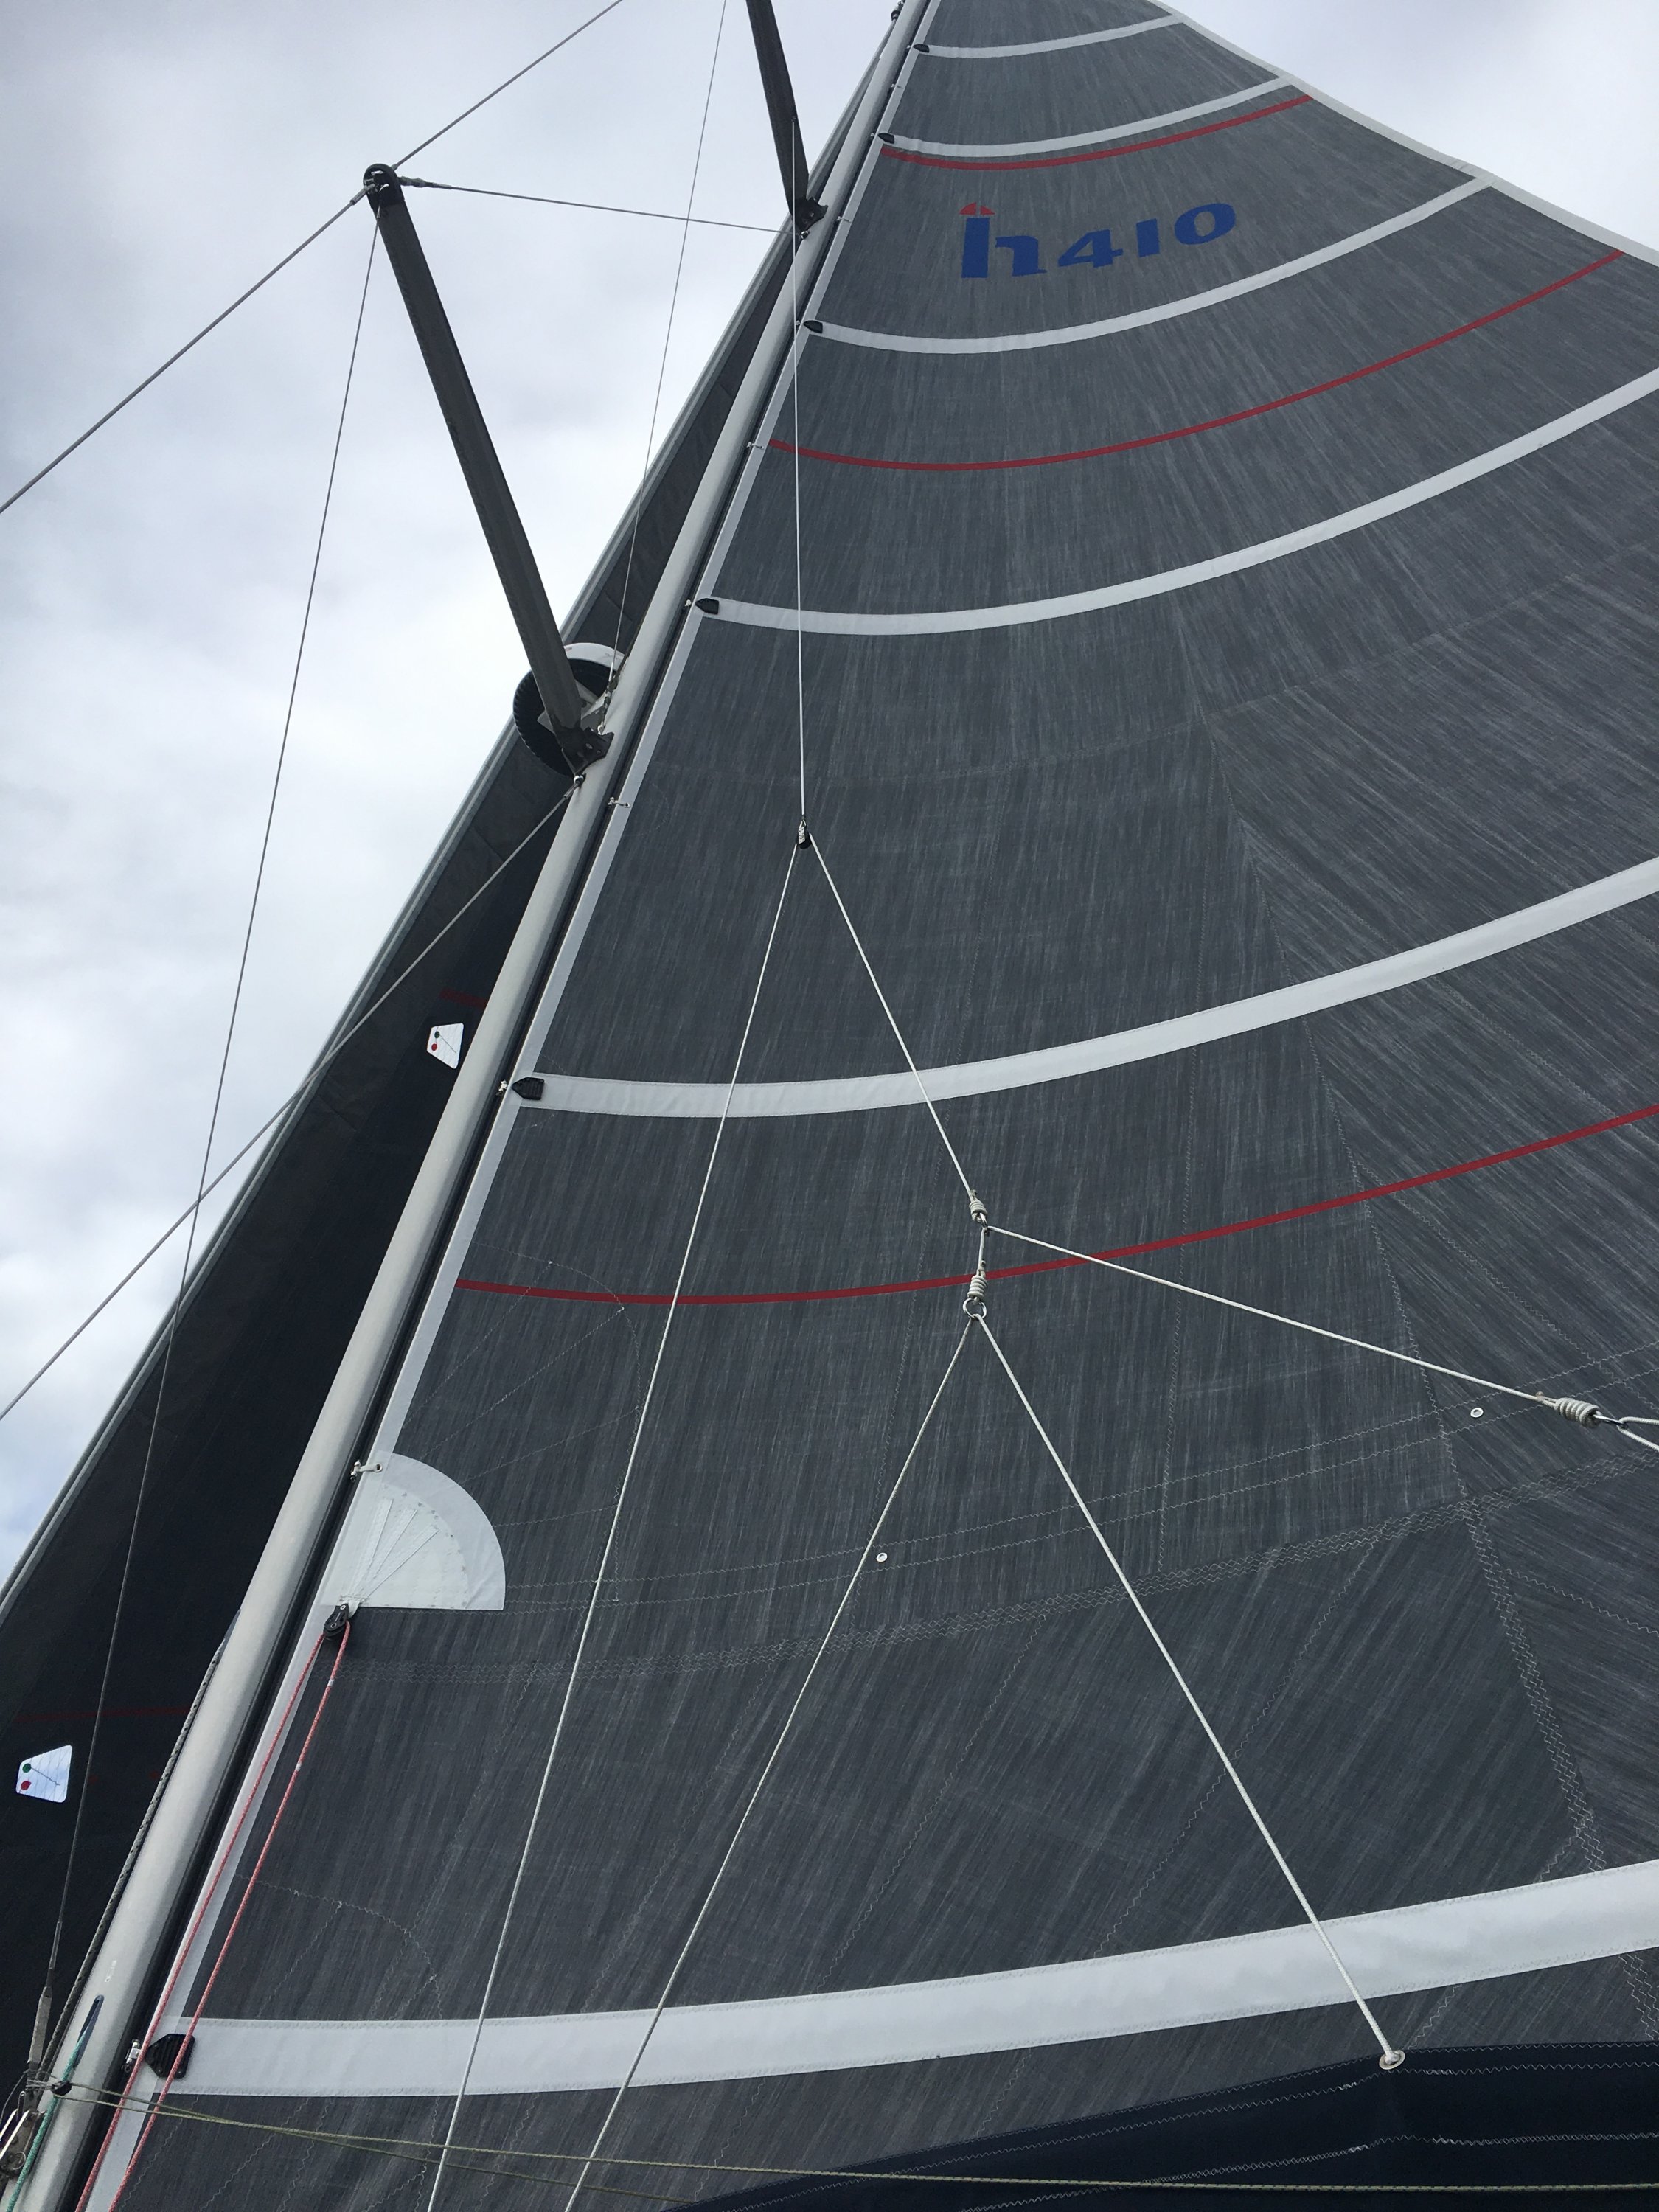 New Sails